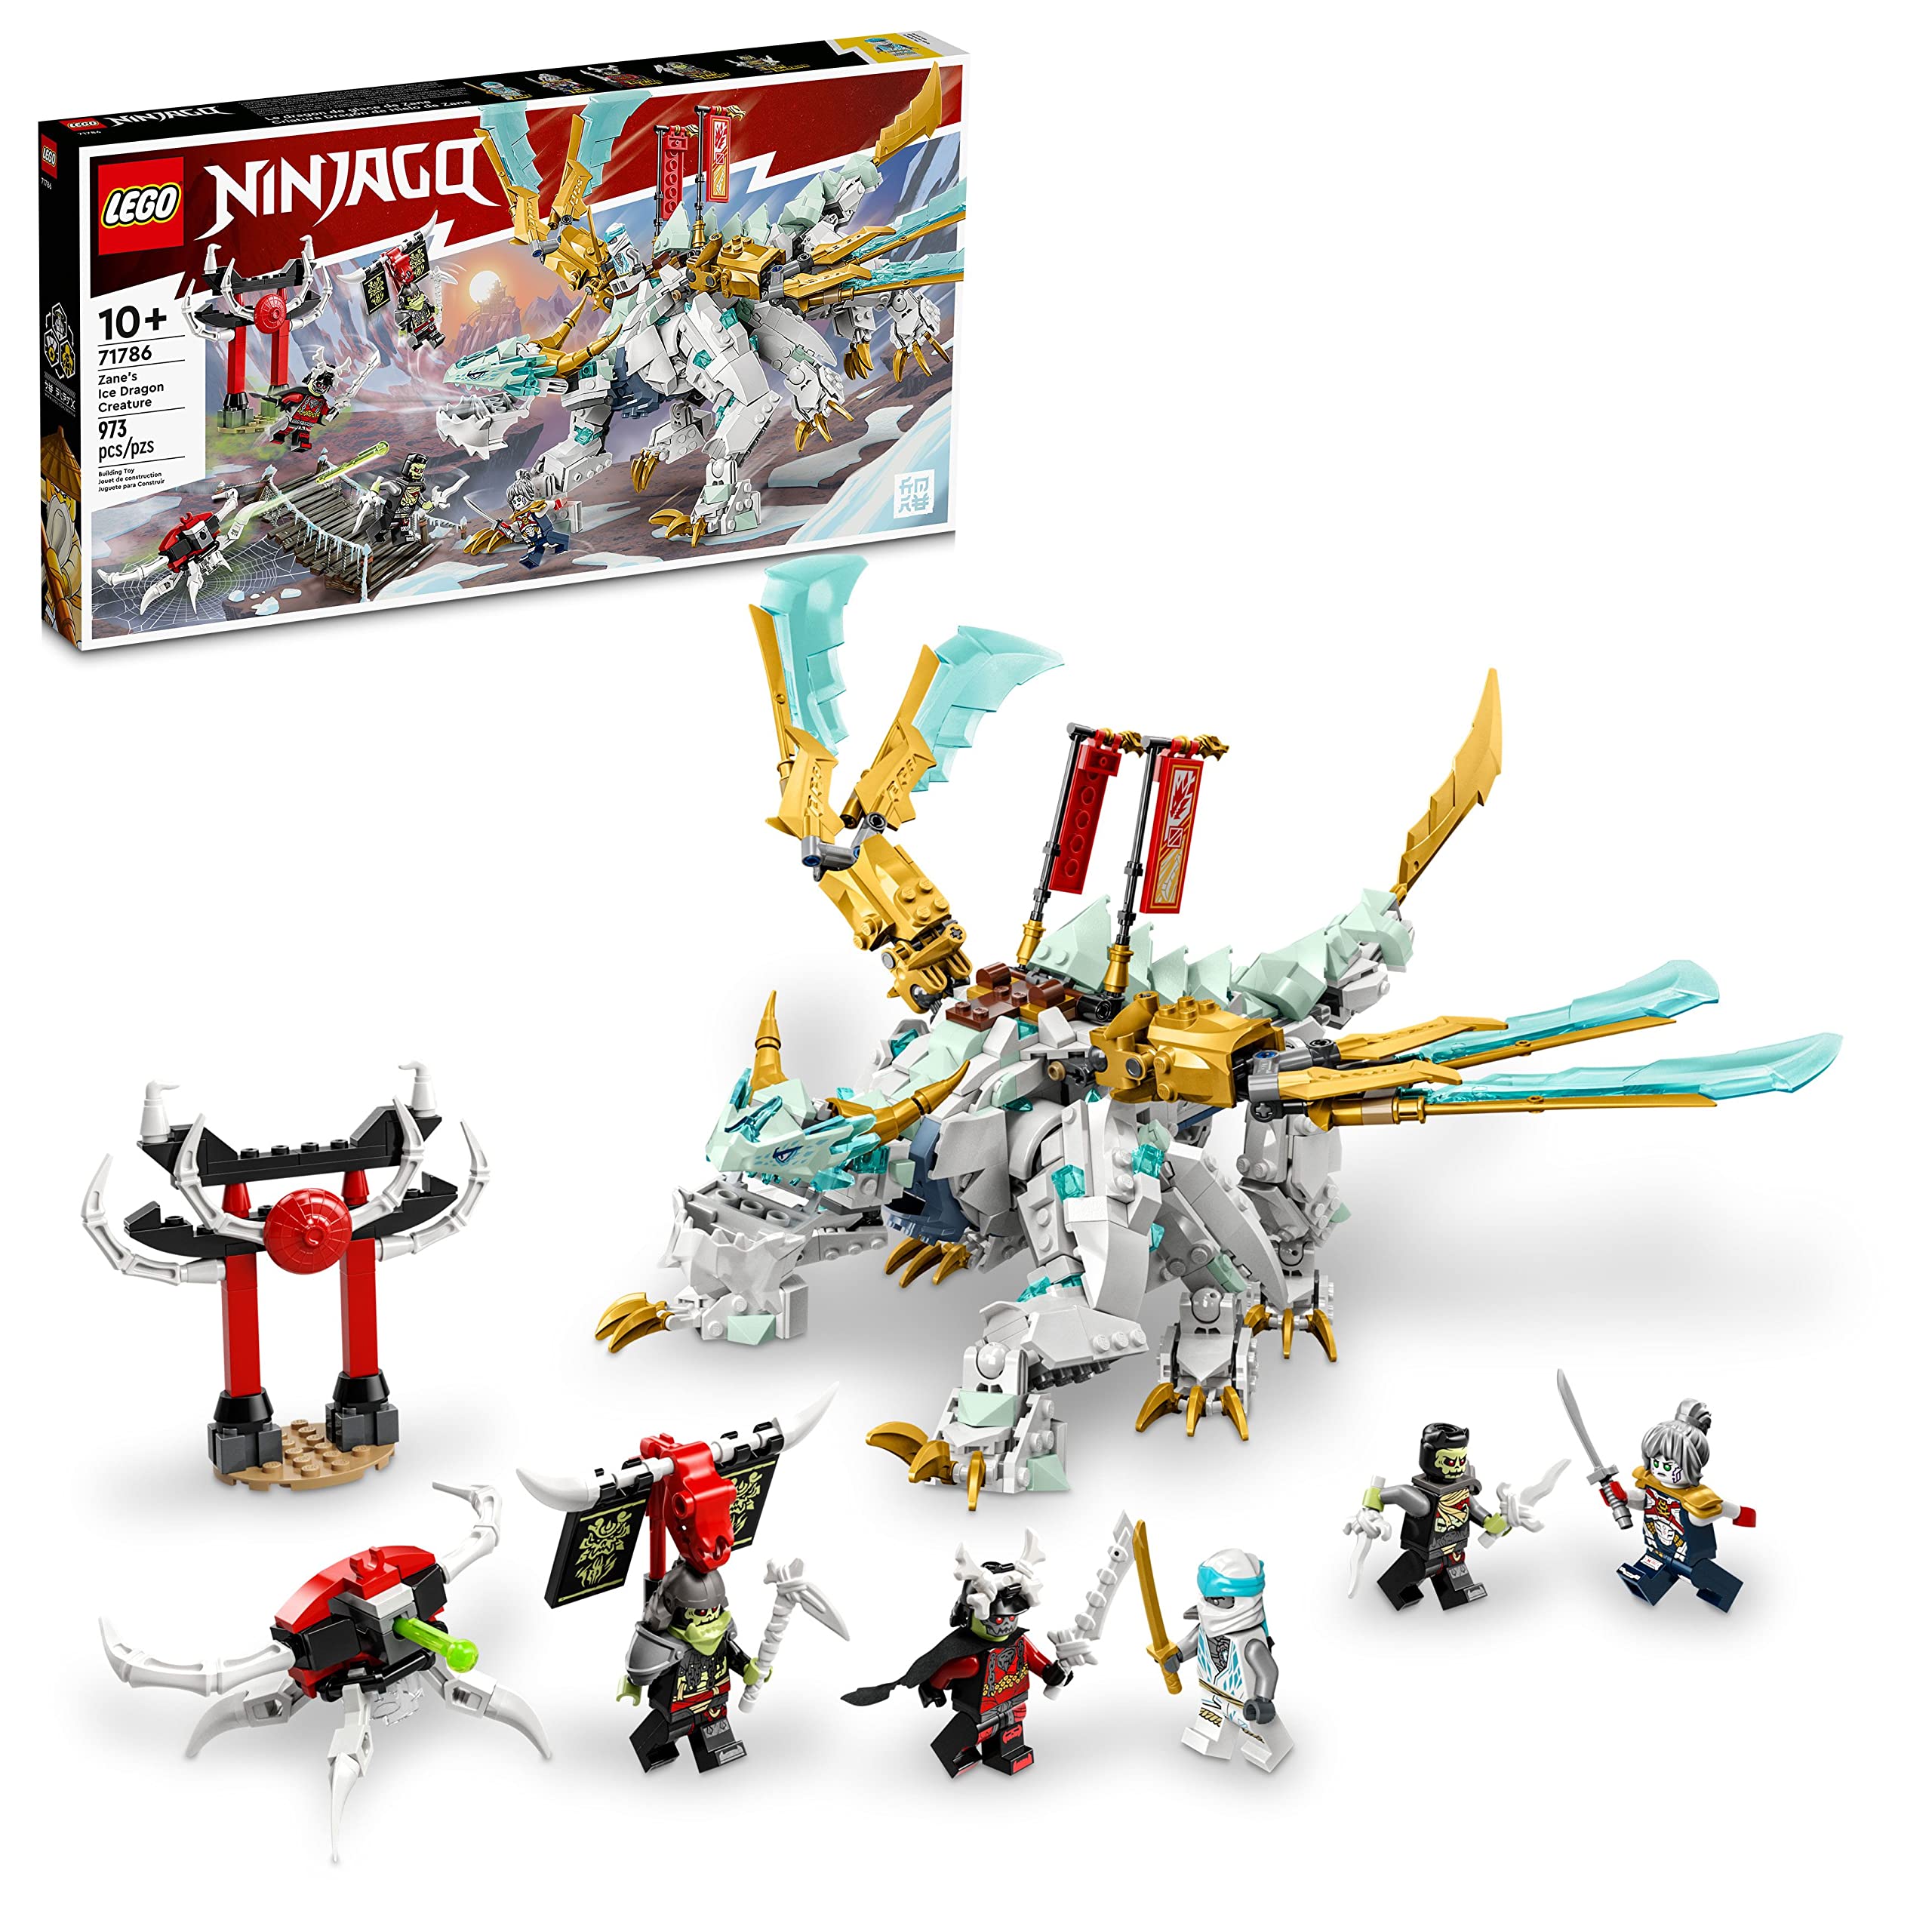 973-Piece LEGO NINJAGO Zane’s Ice Dragon Creature (71786) $81.65 + Free Shipping